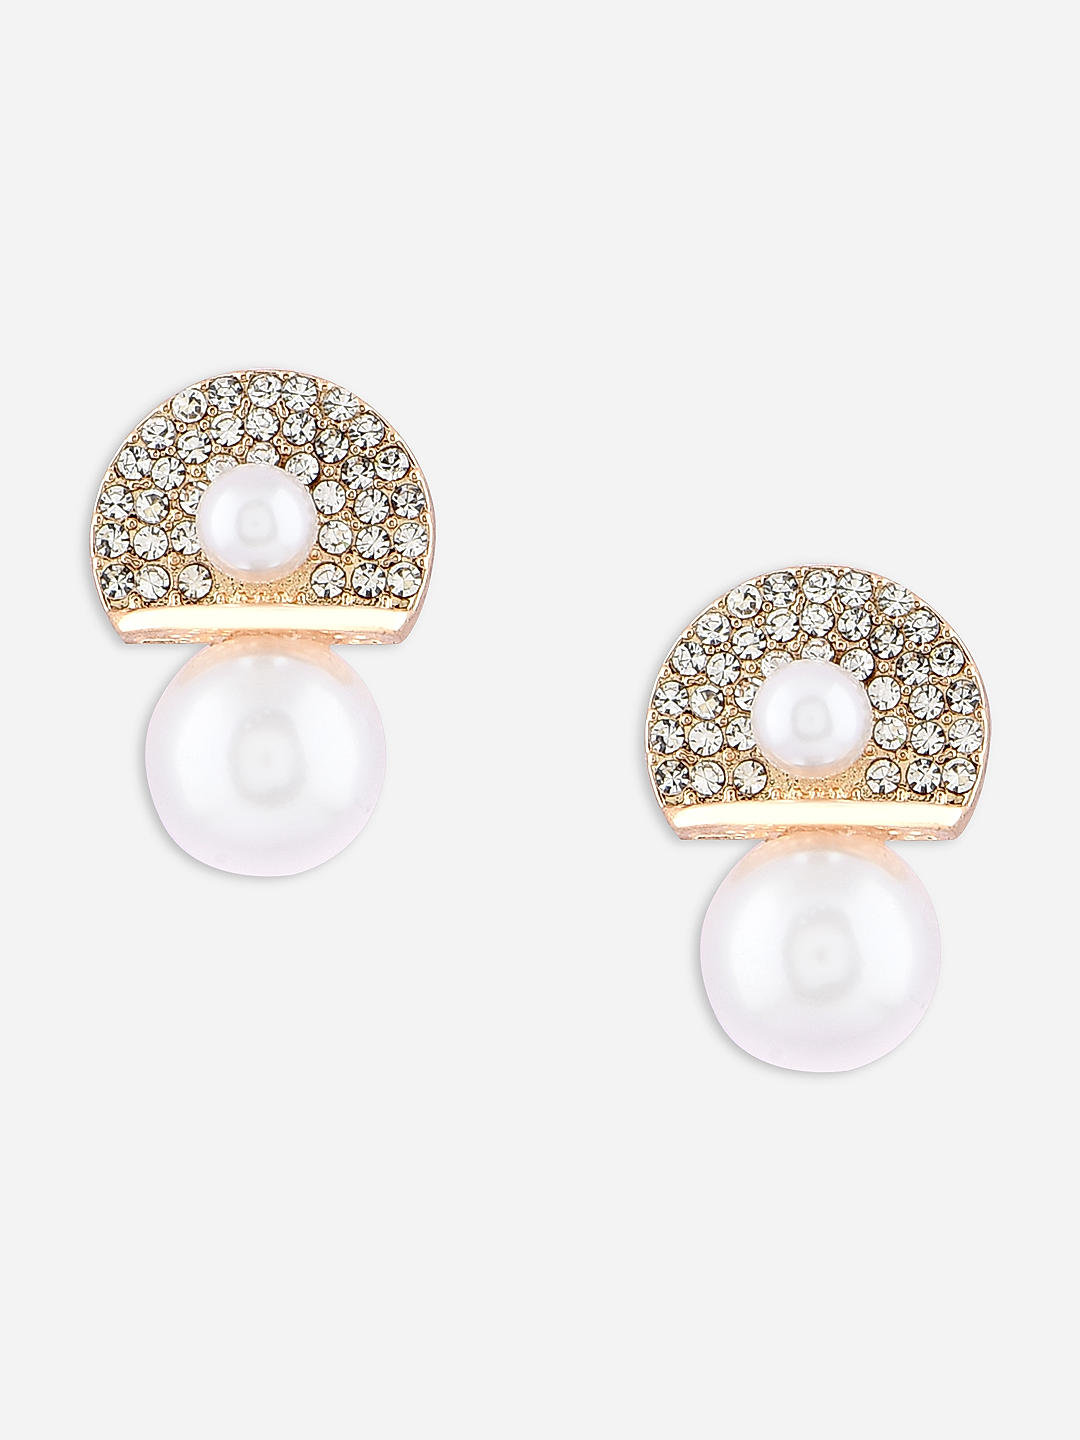 6 carat total 3ct each Lab Grown Diamond Stud Earrings in 14k Gold – ASSAY